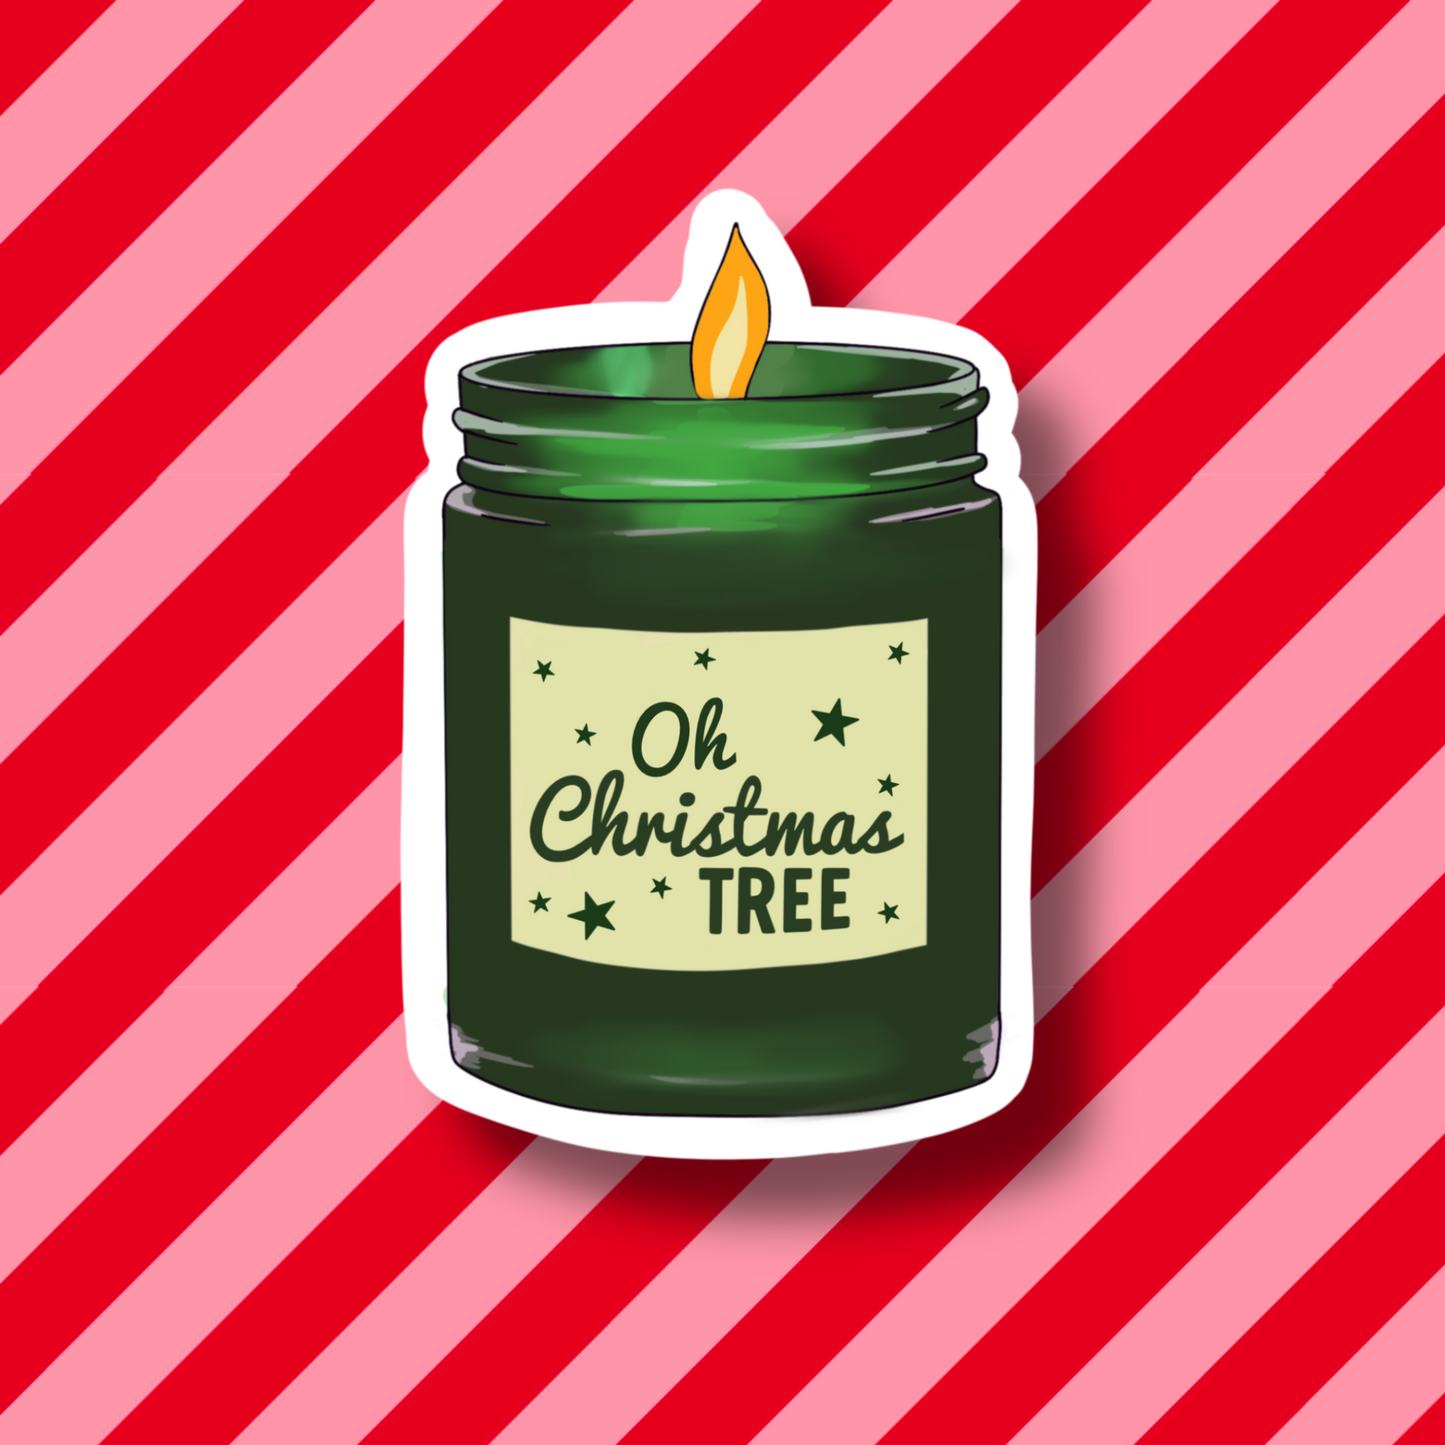 Christmas Tree Candle | A Very Merry Birch Studios Christmas